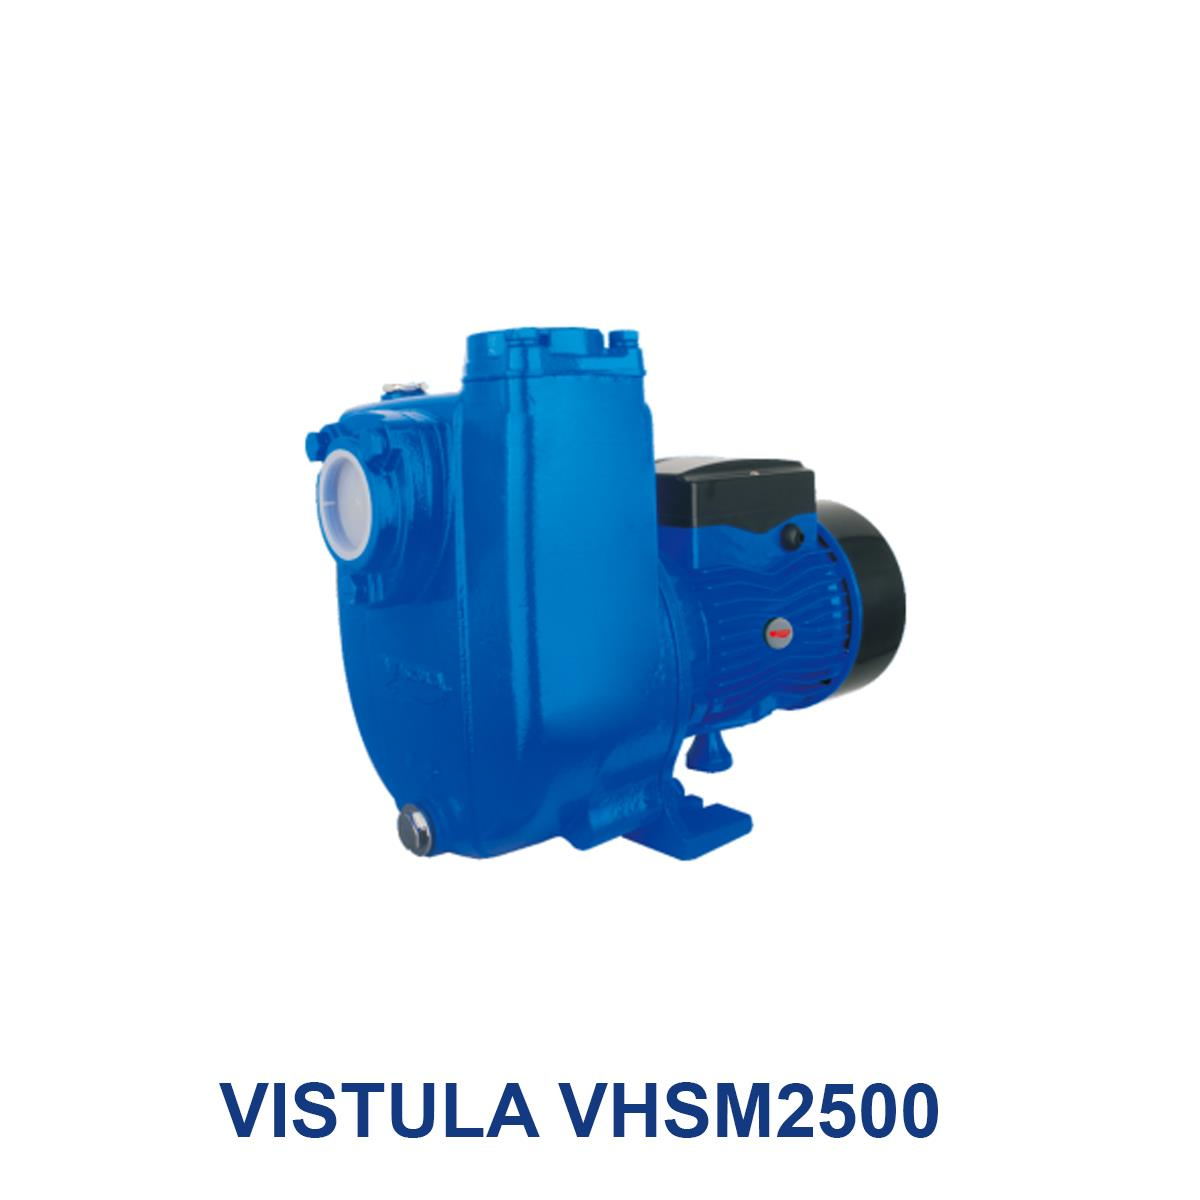 VISTULA-VHSM2500